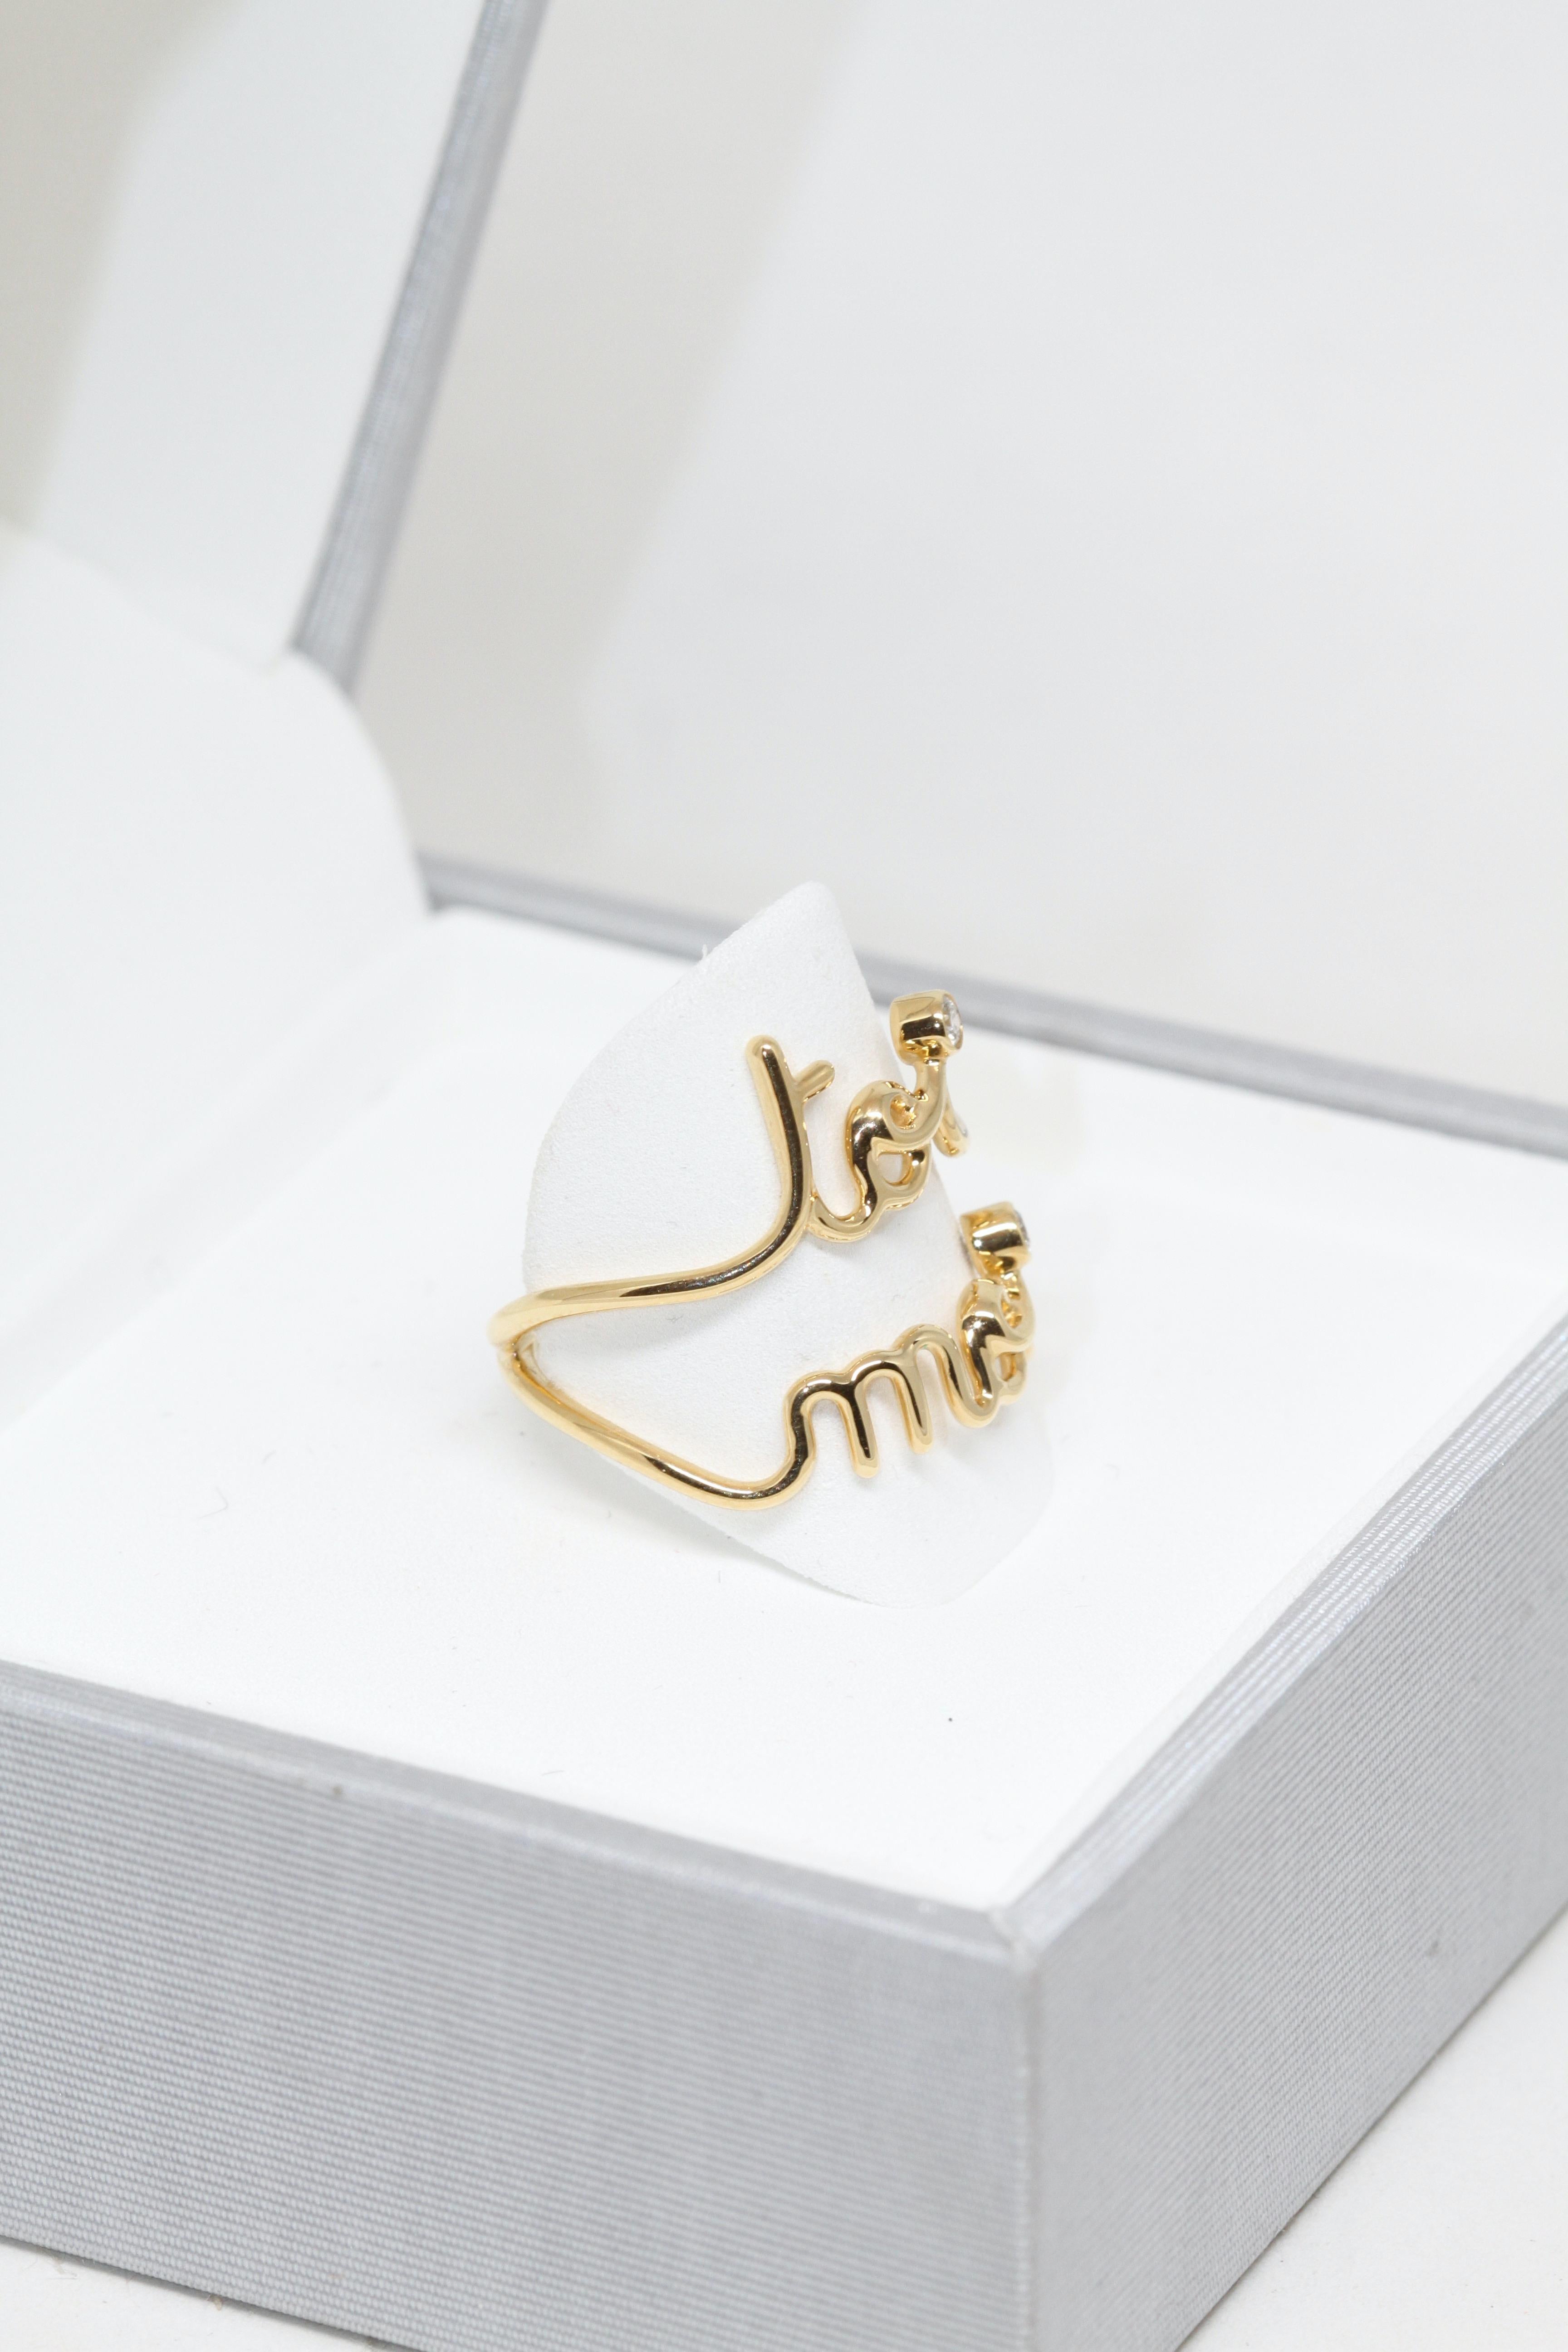 Brilliant Cut Christian Dior Oui Toi Moi 18K Yellow Gold Diamond Ring